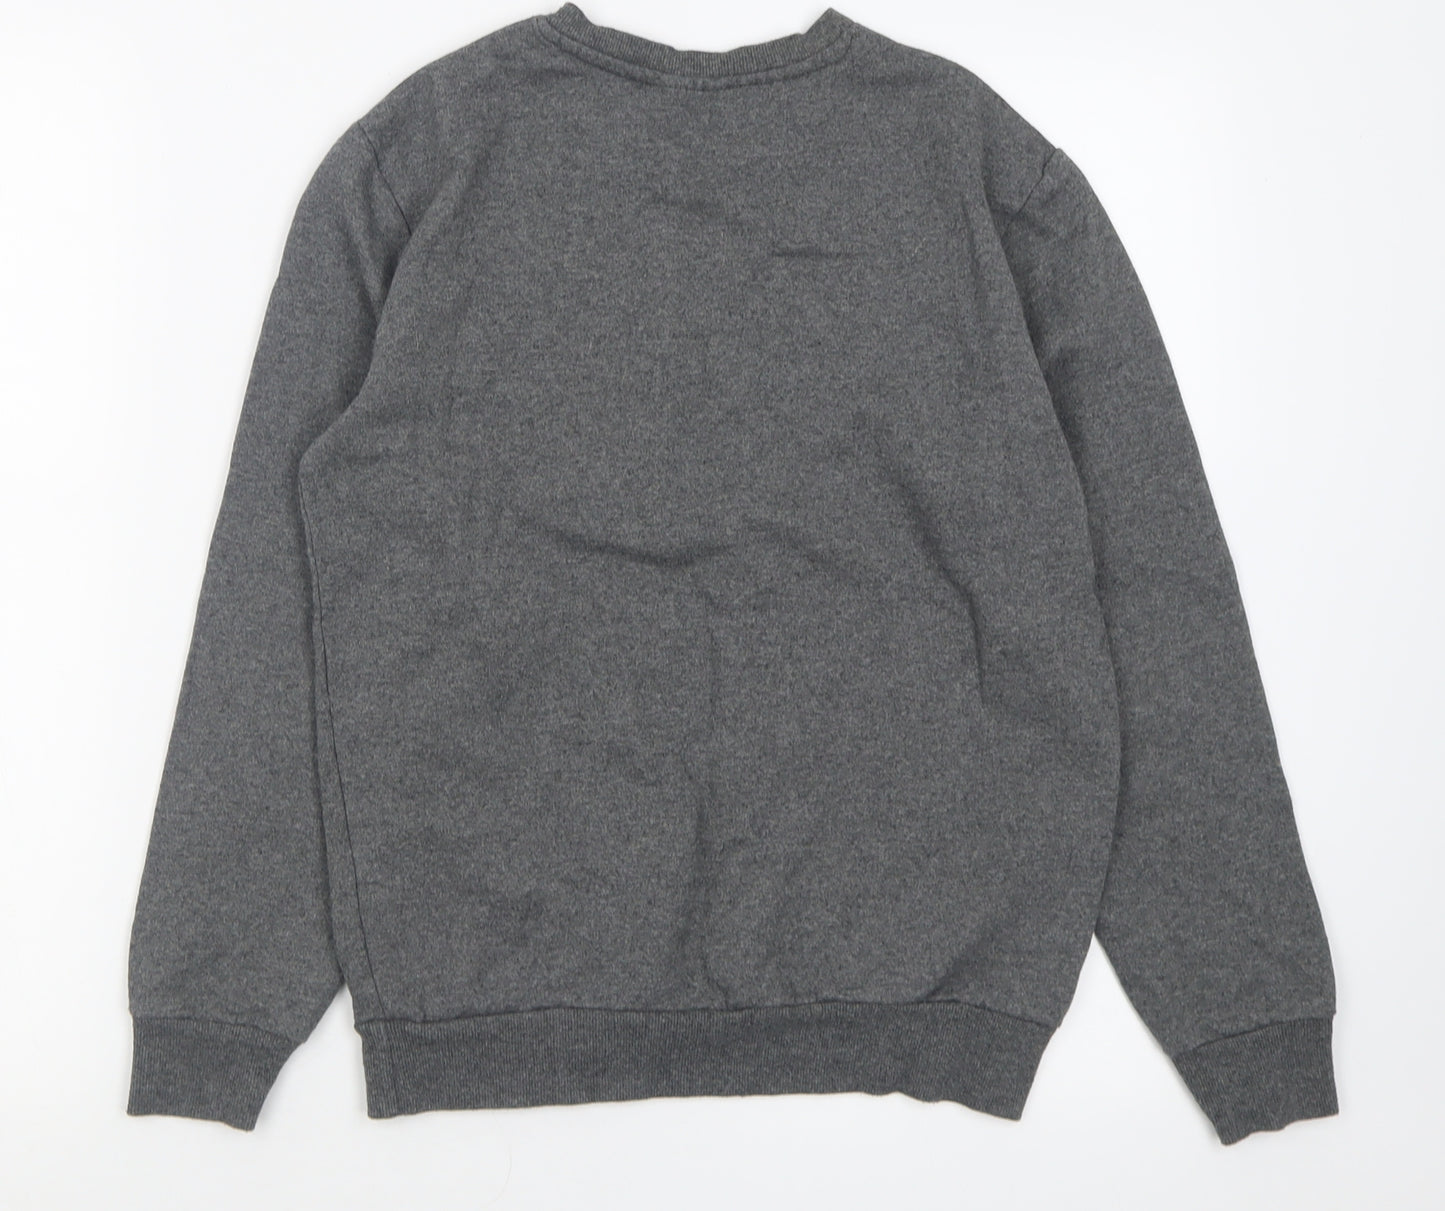 Destination Boys Grey  Cotton  Sweatshirt Size 11-12 Years  Pullover - play hard